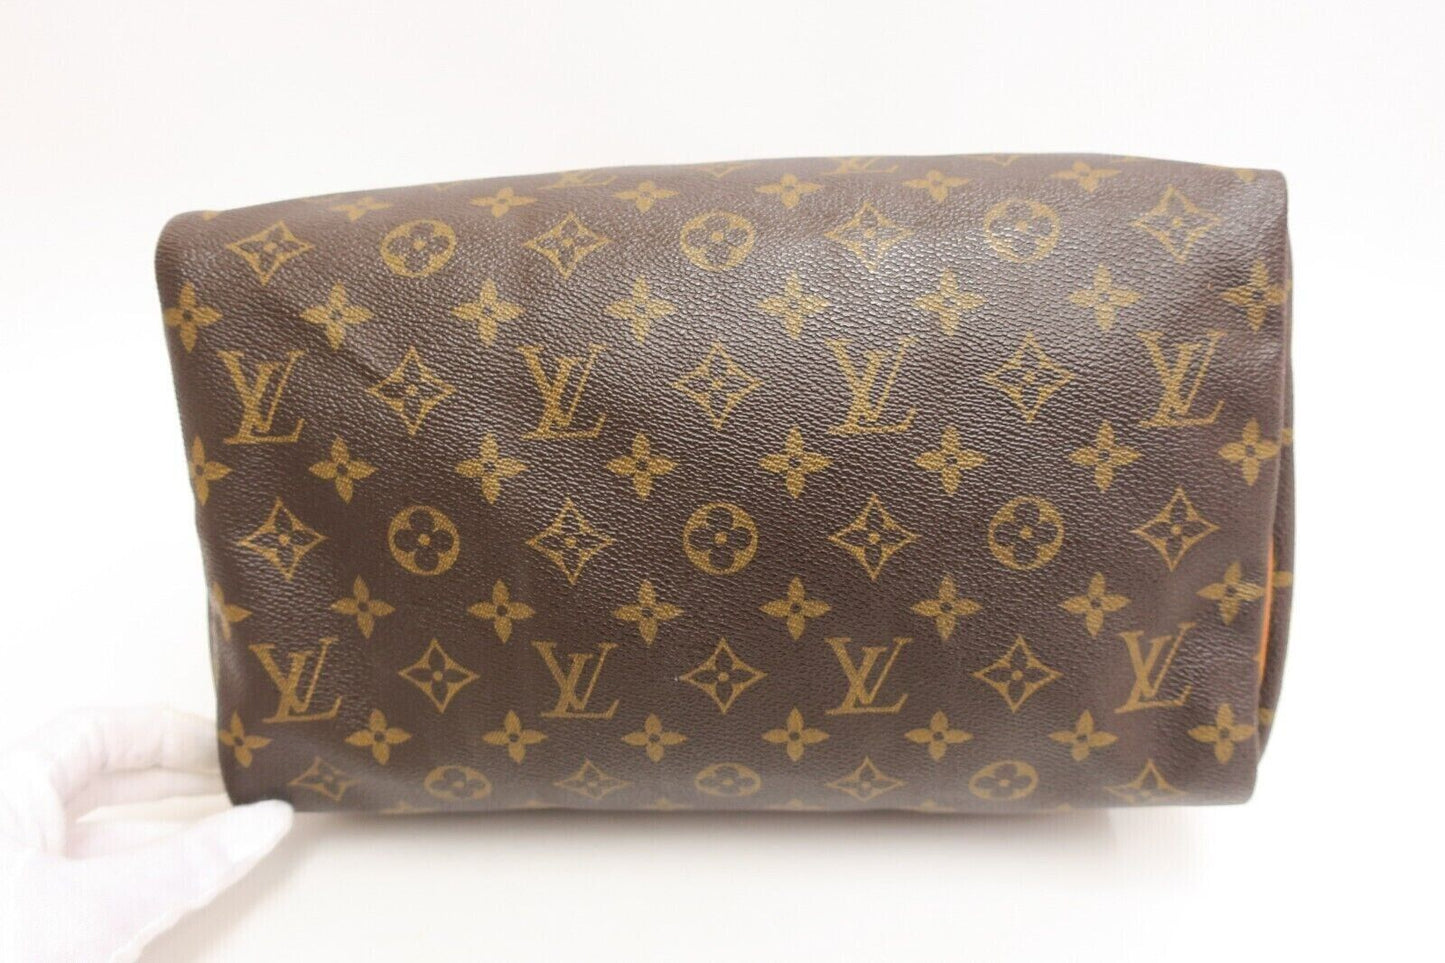 Authentic Louis Vuitton Speedy 30 Handbag Monogram Brown #22176 - Pre-Owned